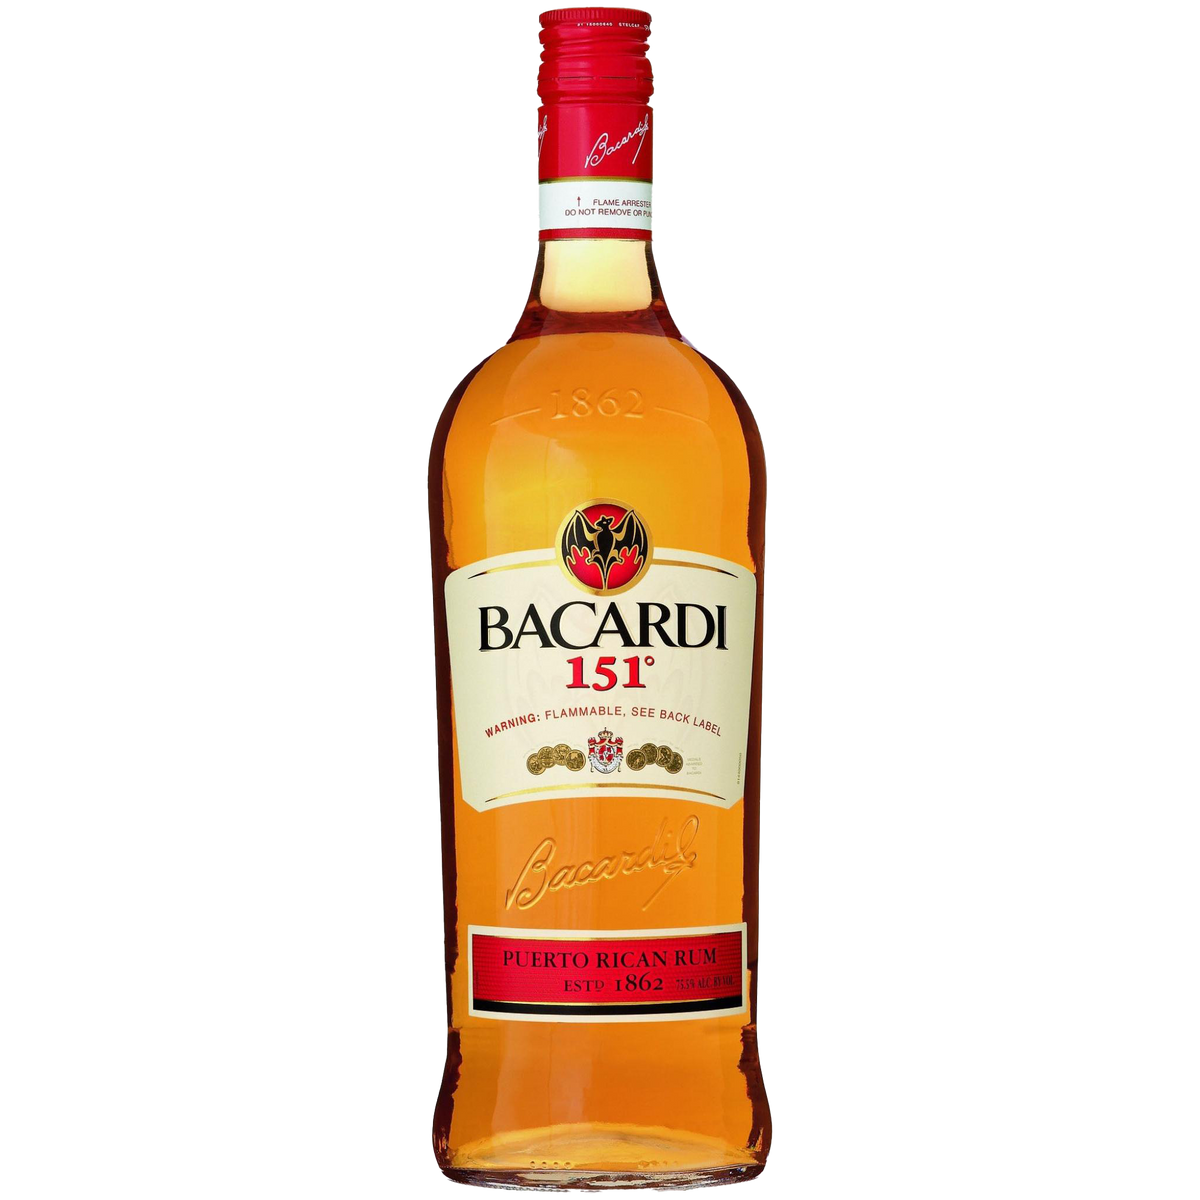 bacardi bottle label